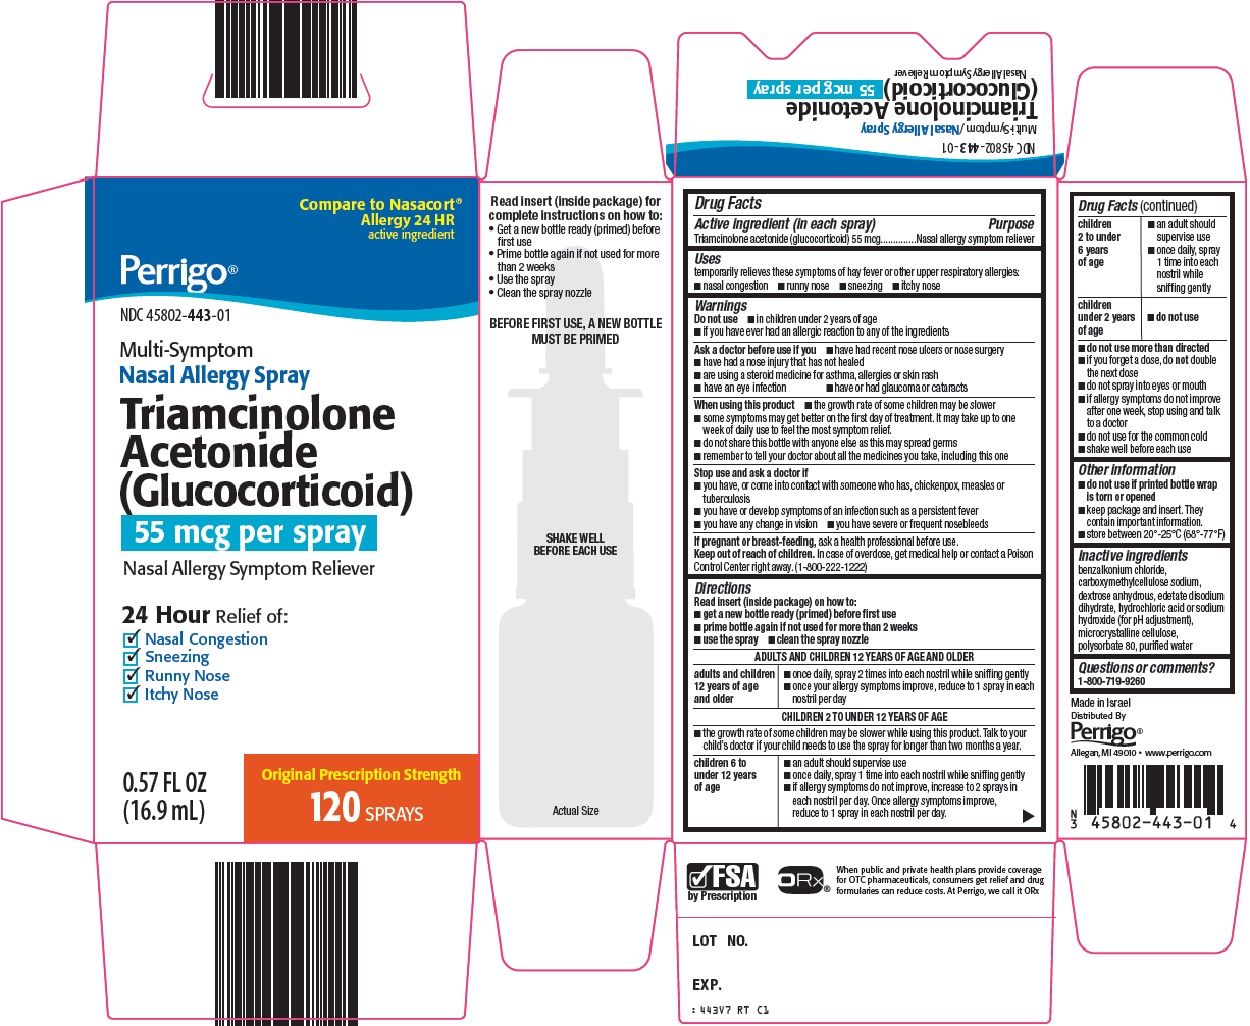 Perrigo Triamcinolone Acetonide (Glucocorticoid) image